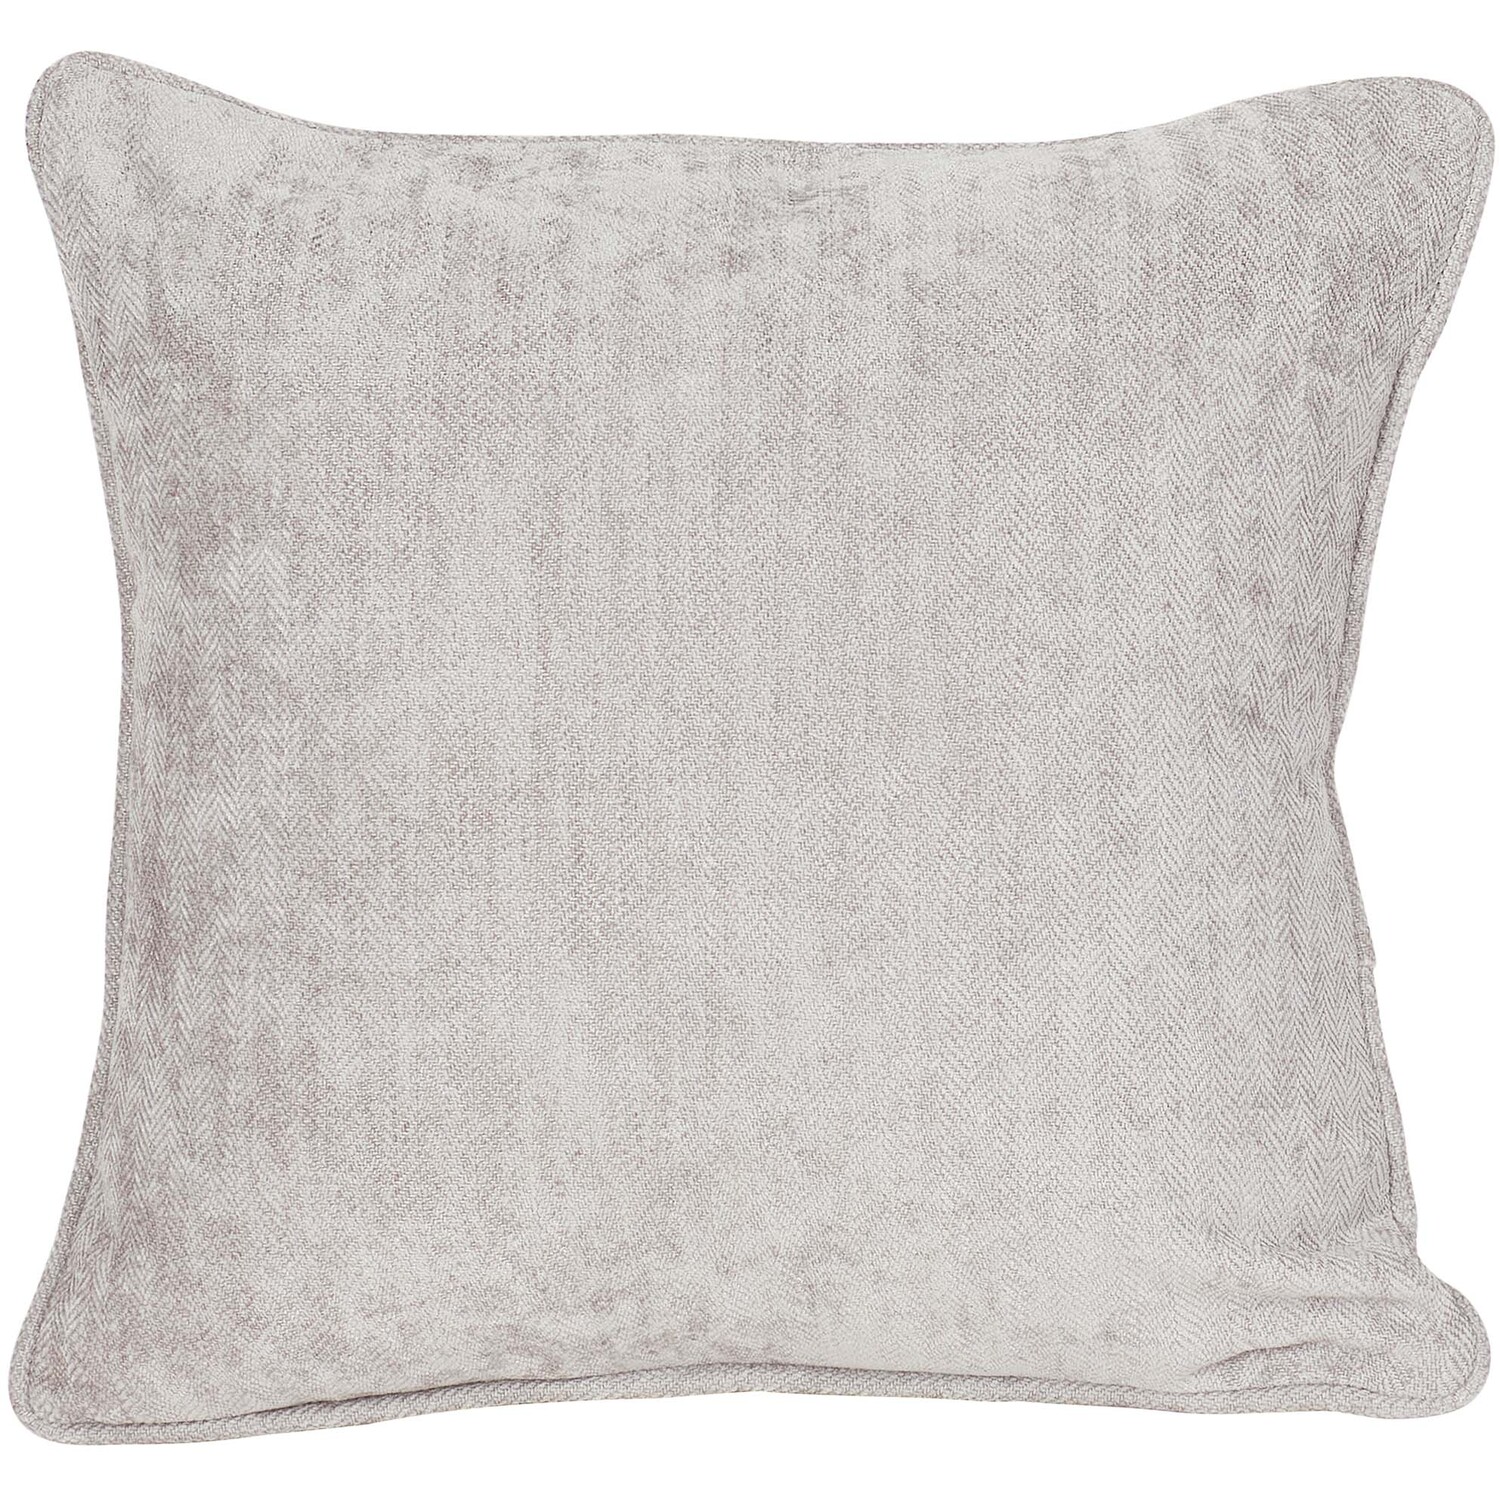 Alden Cushion  - Dove Grey Image 1